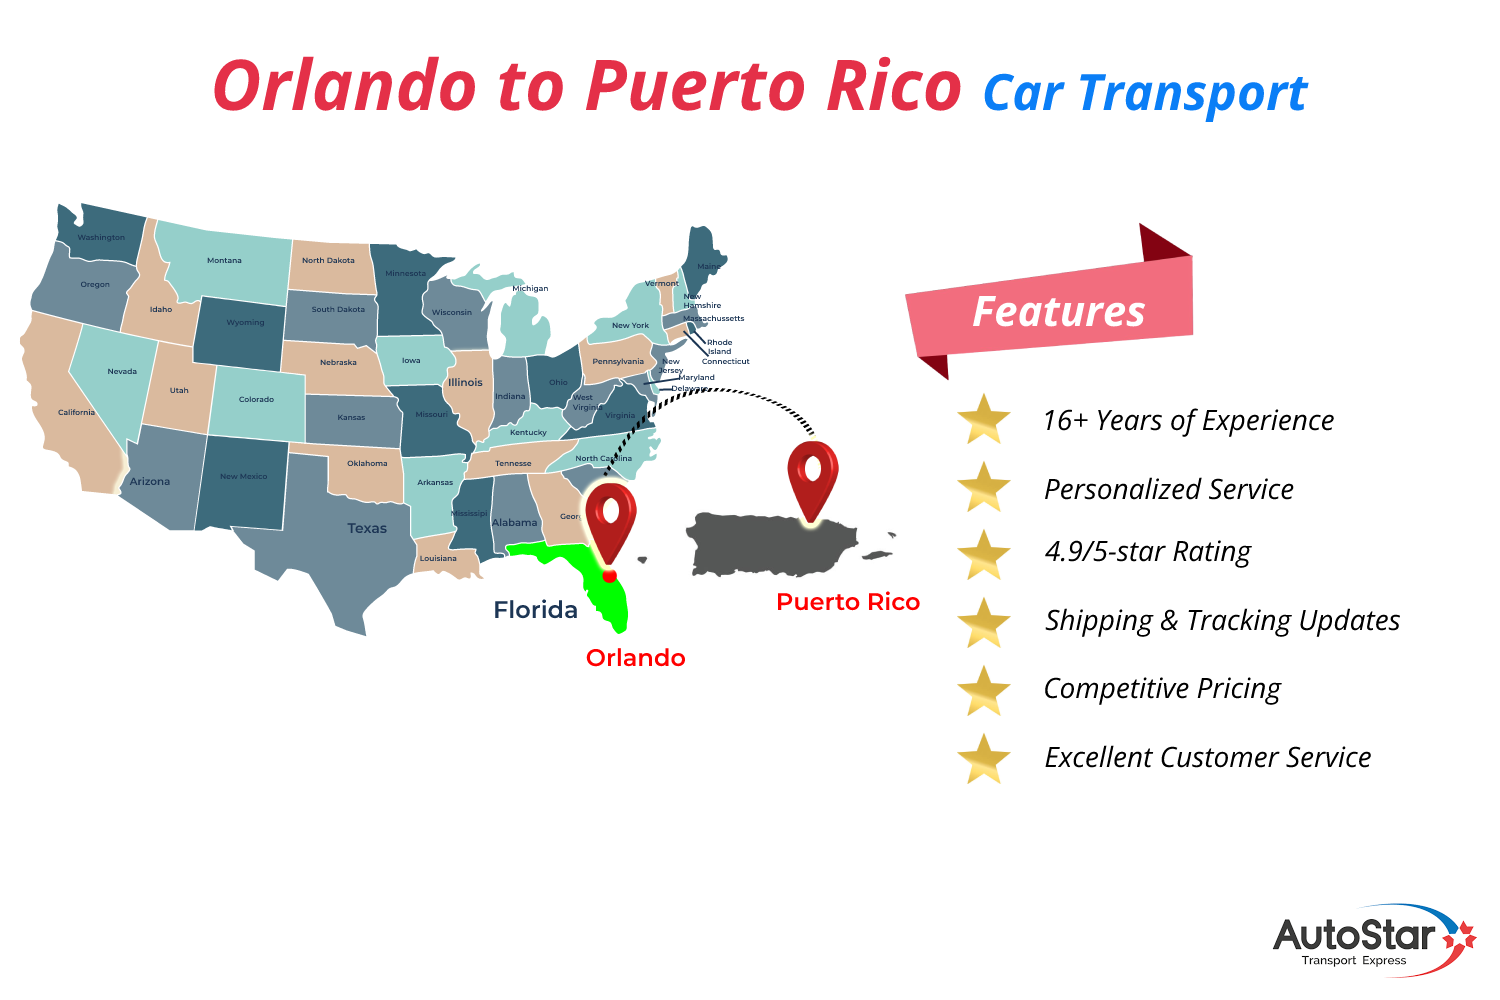 Orlando to Puerto Rico car transport